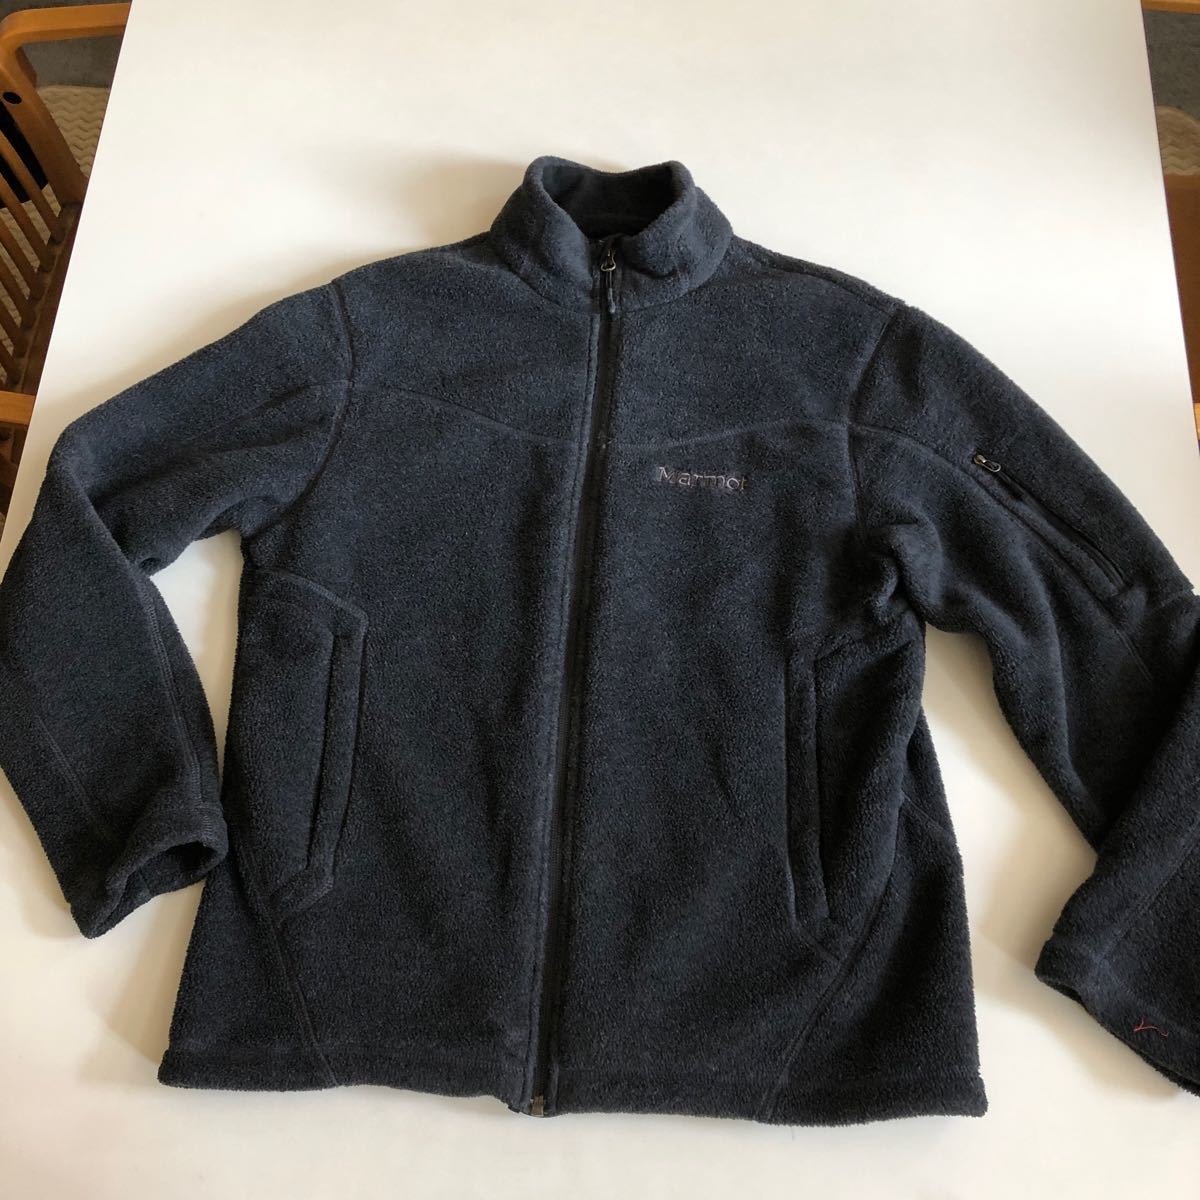 Marmot fleece jacket black gray 